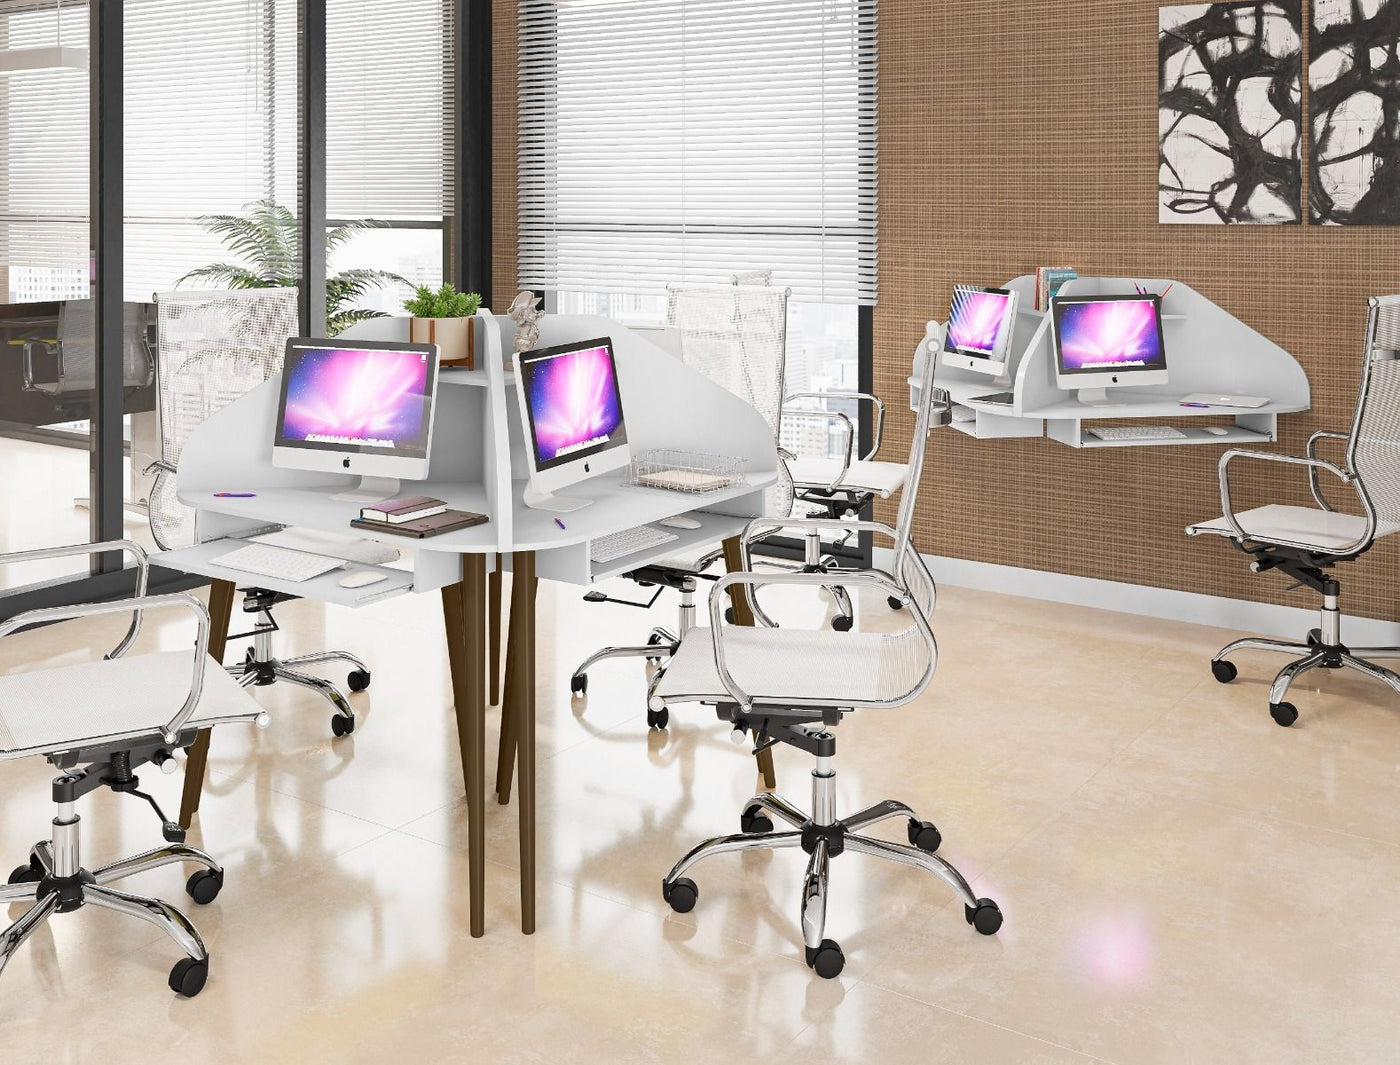 Gatutca Cubicle Section Desk with Keyboard Shelf Set of 4 - White